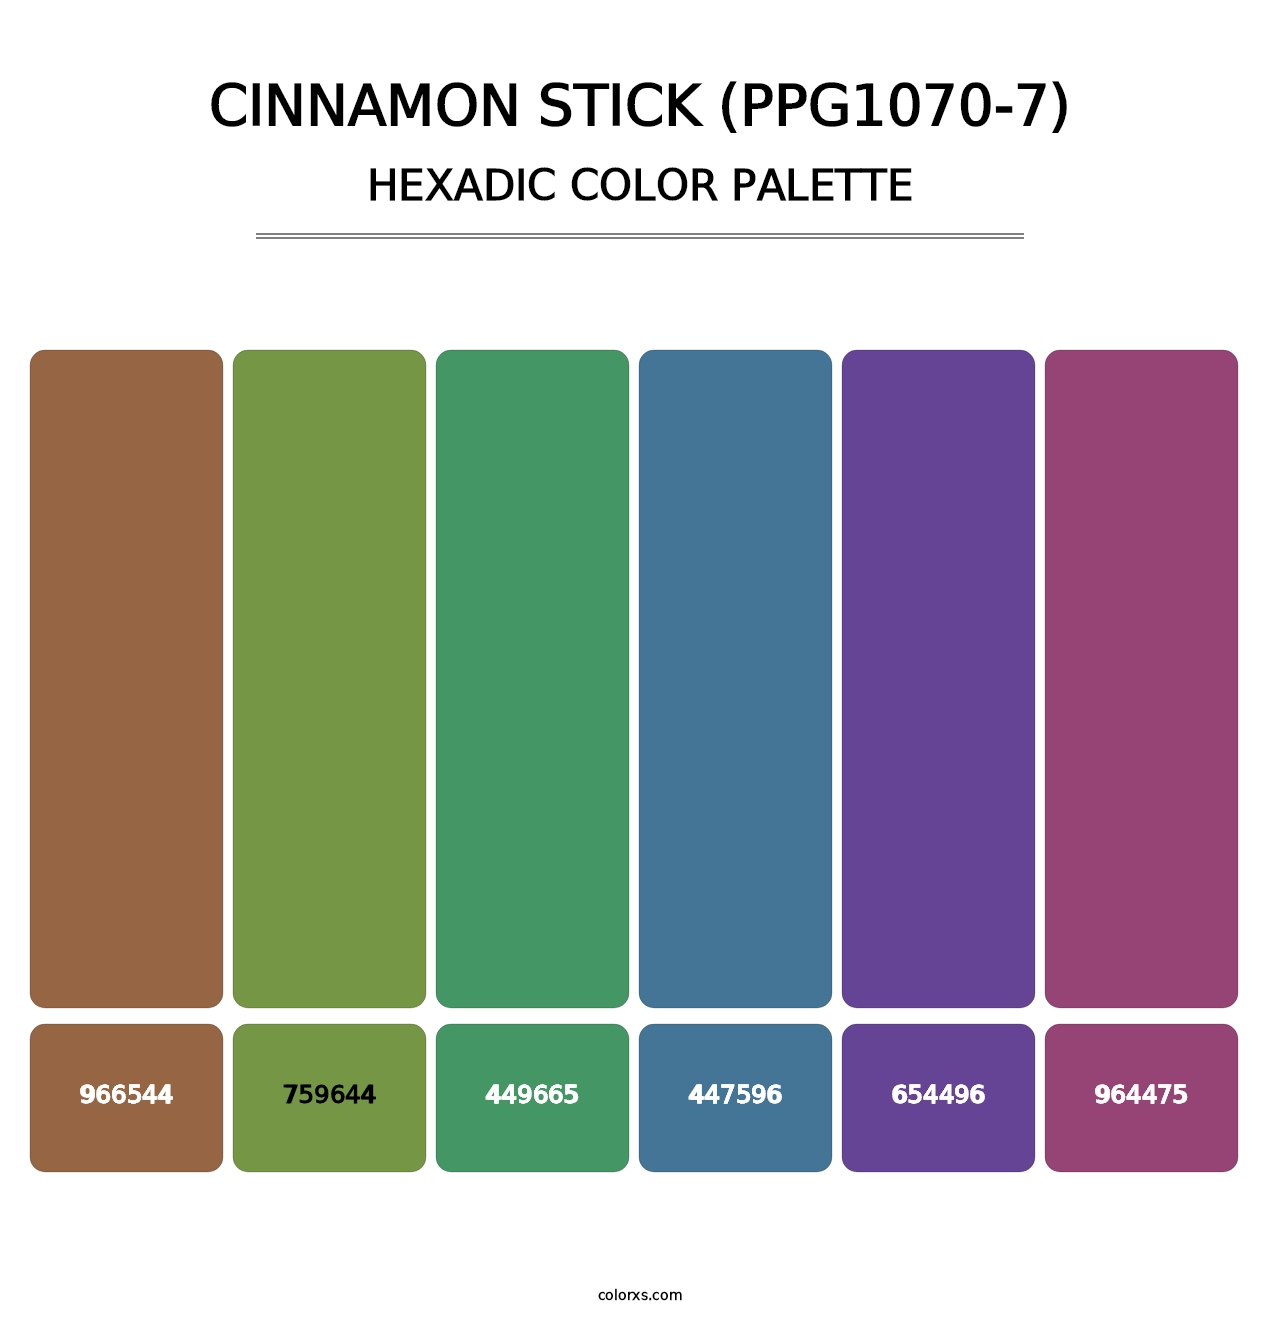 Cinnamon Stick (PPG1070-7) - Hexadic Color Palette